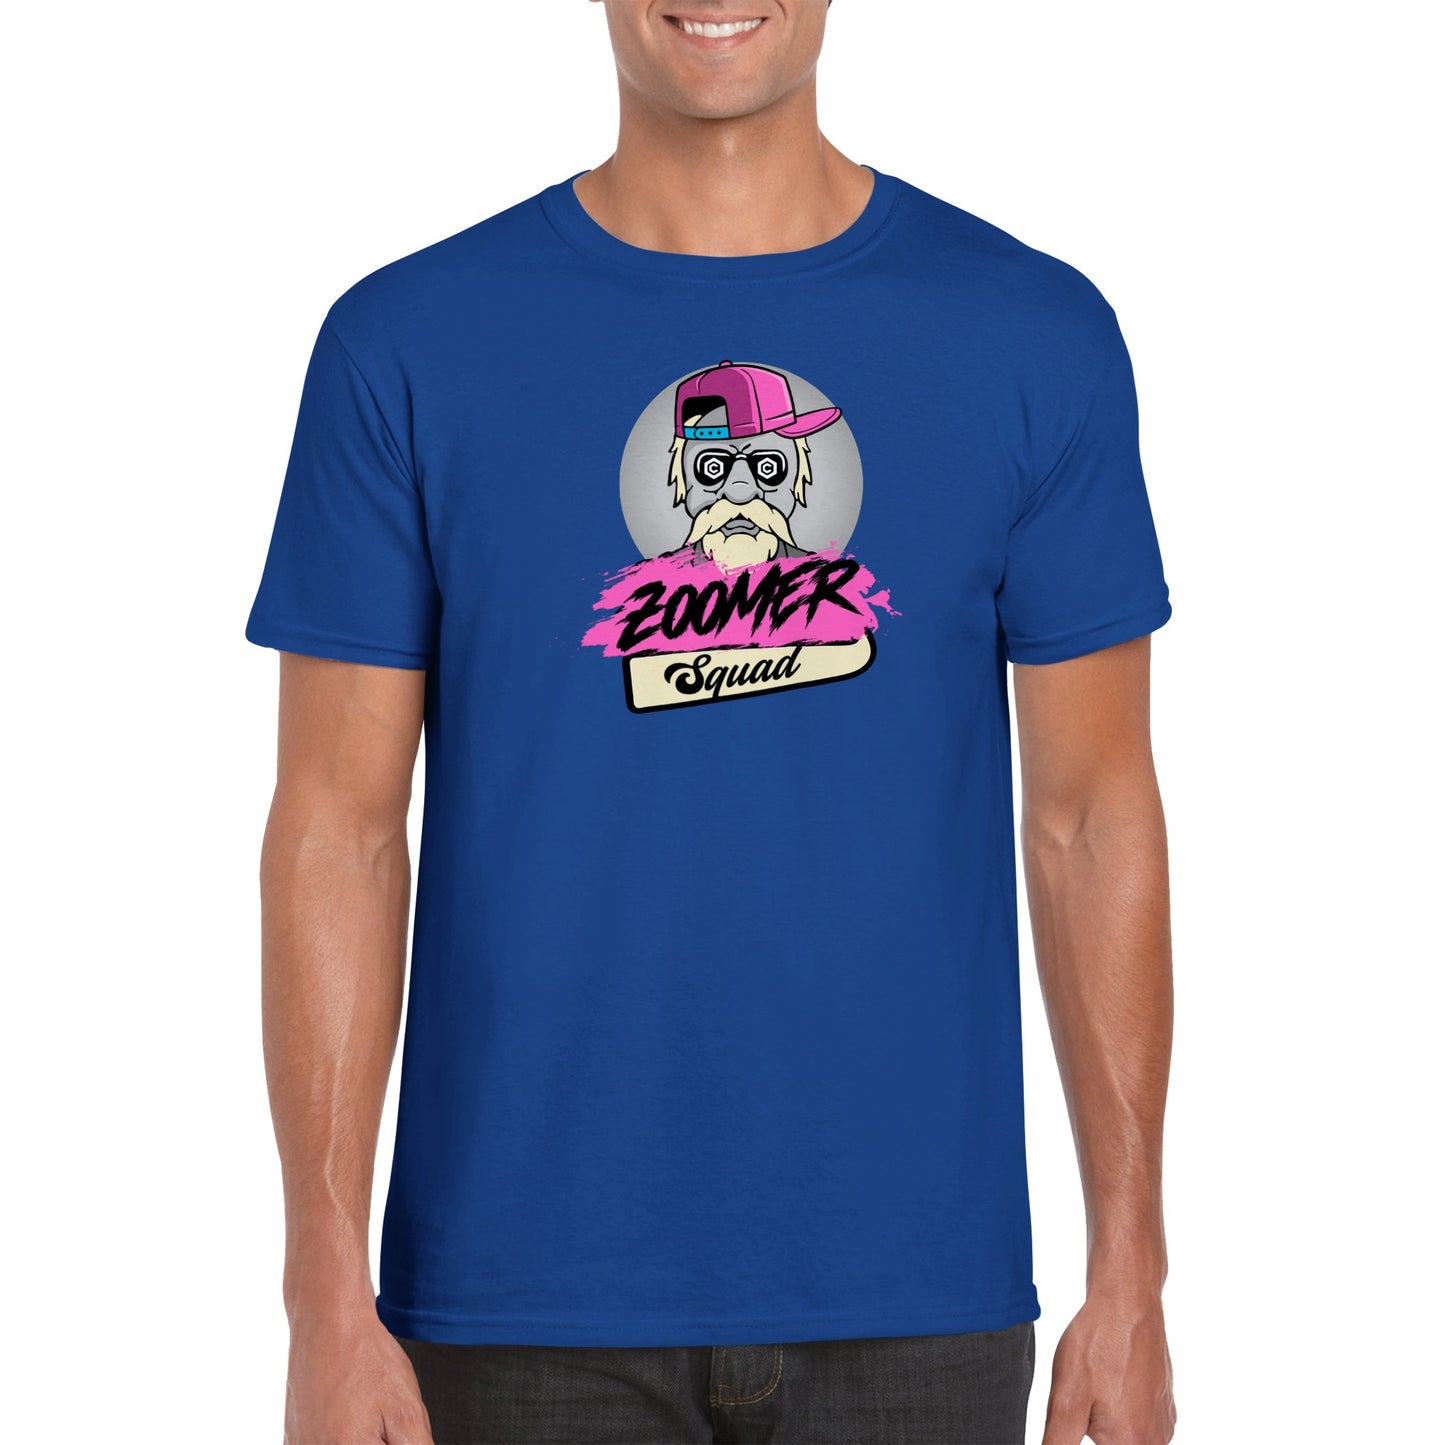 Boomer Squad Classic Unisex Crewneck T-shirt